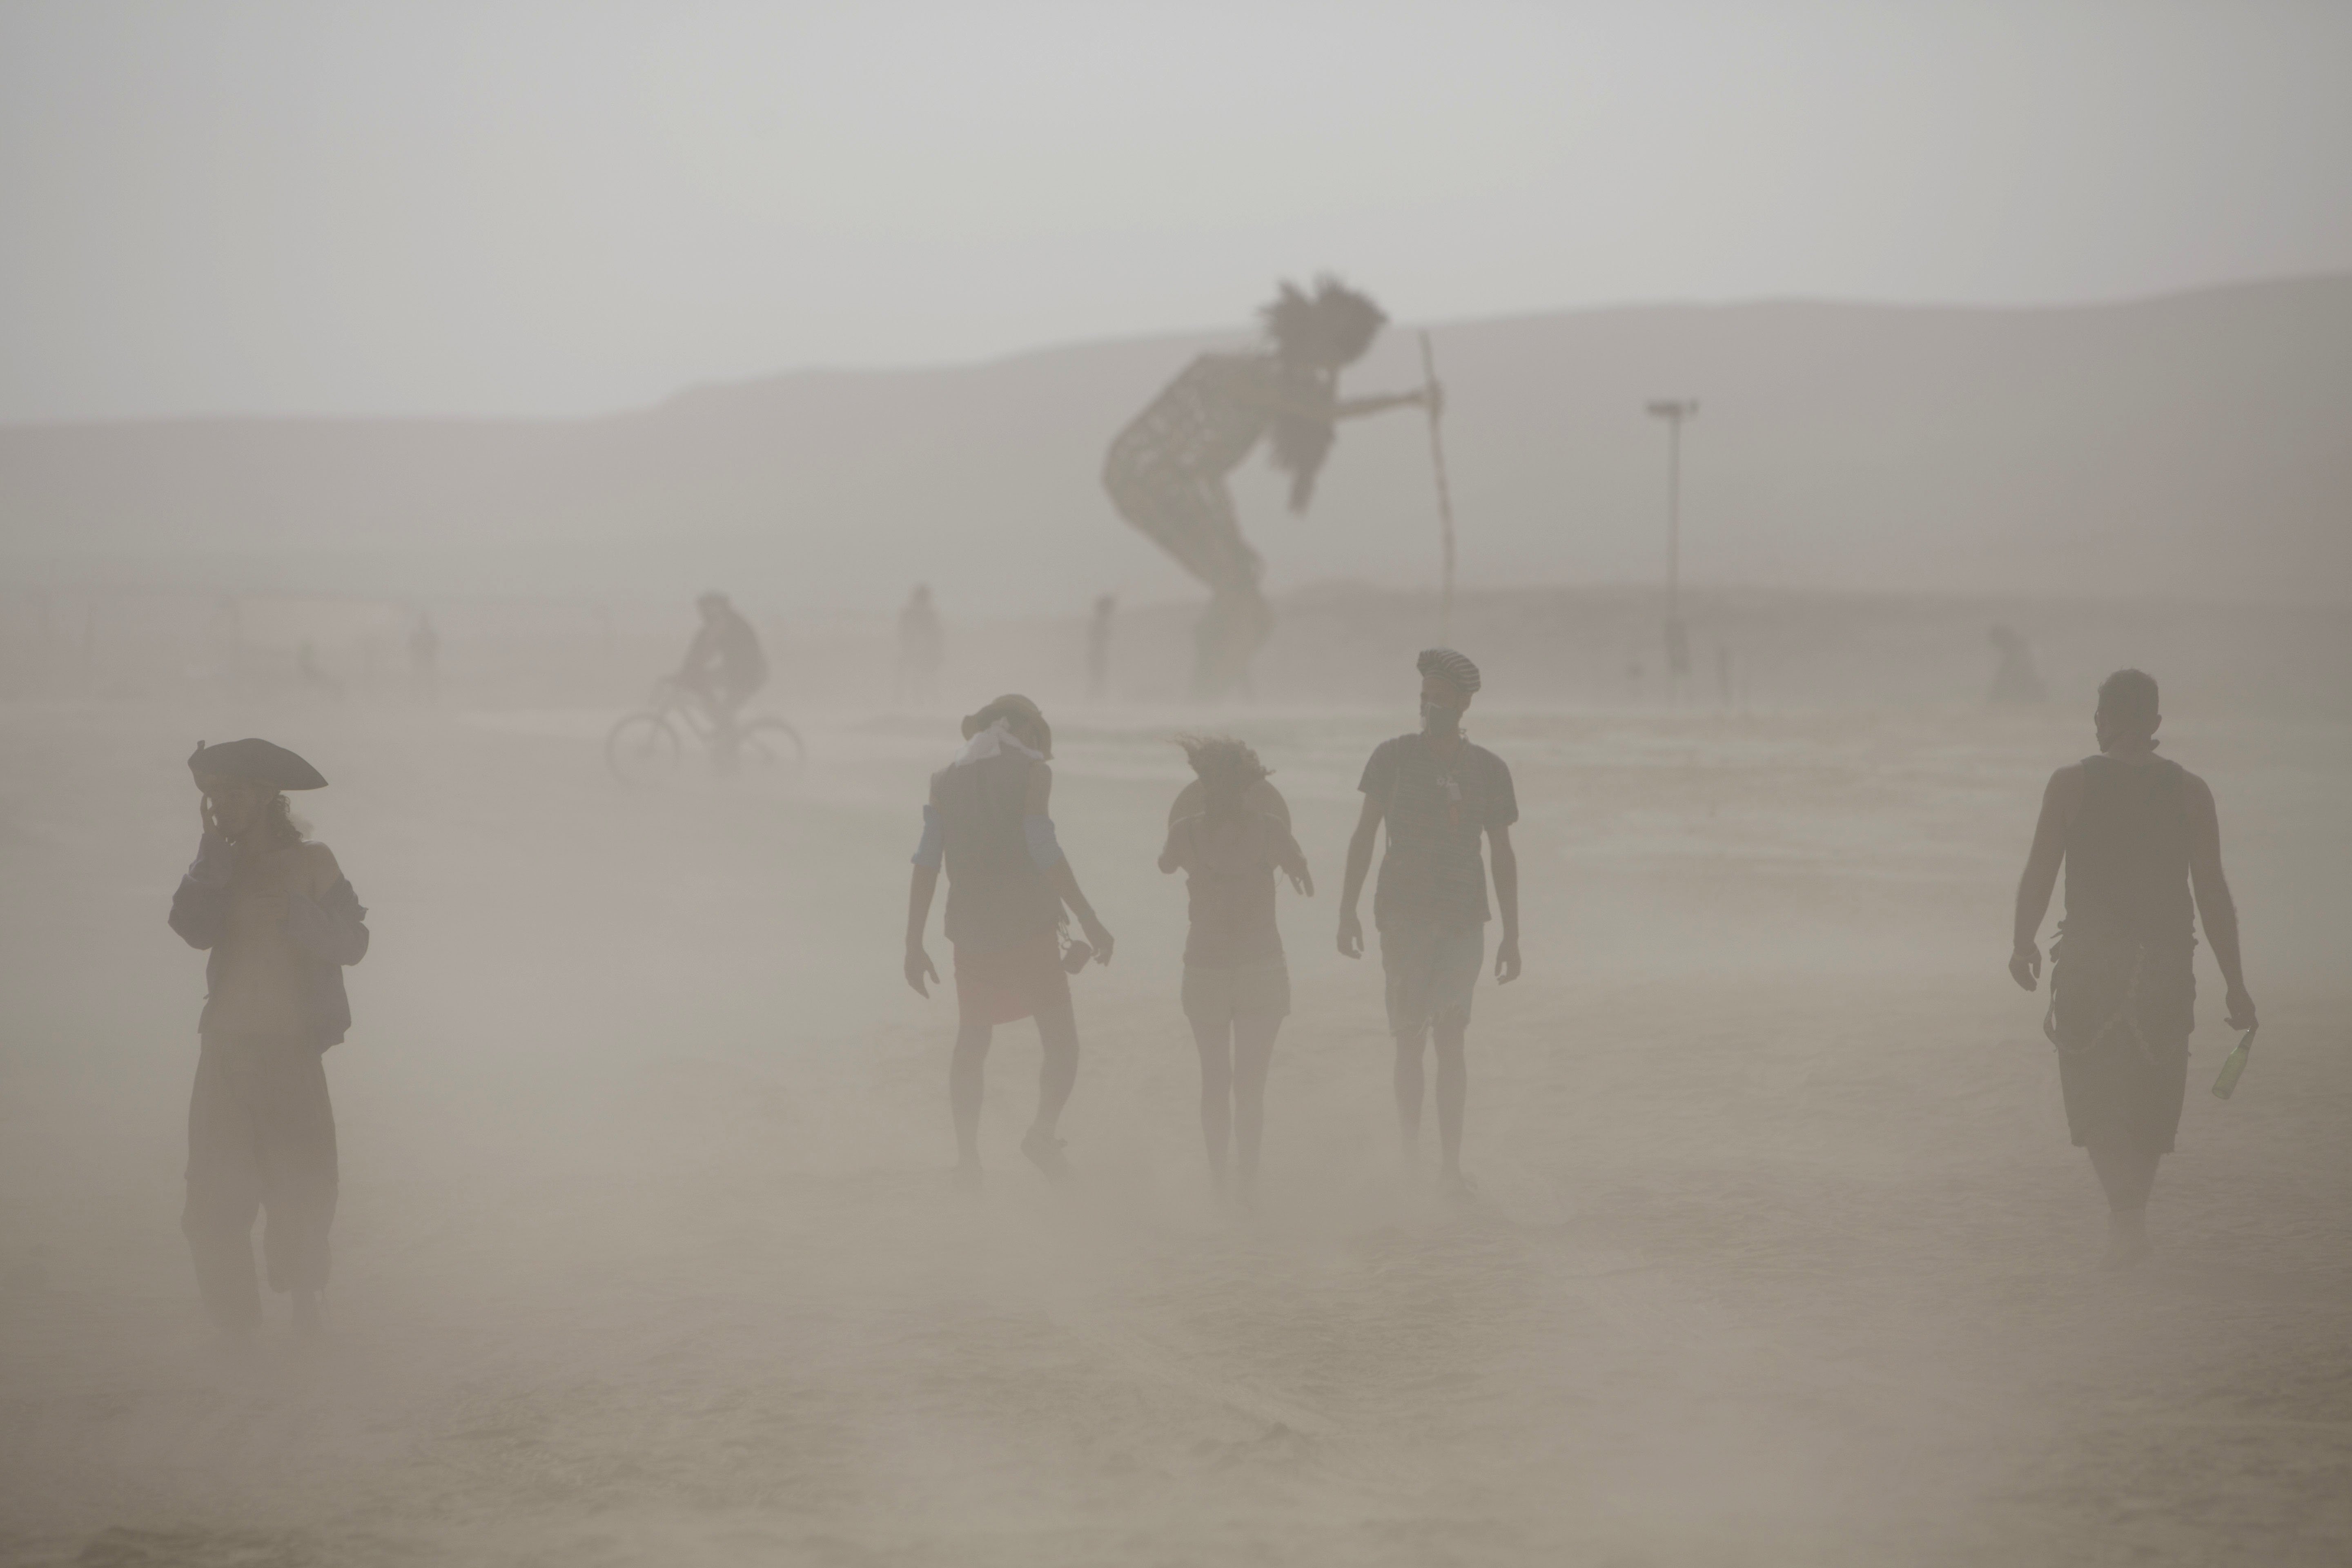 People walk in the dusty playa in the Negev Desert, Israel on June 5, 2014.